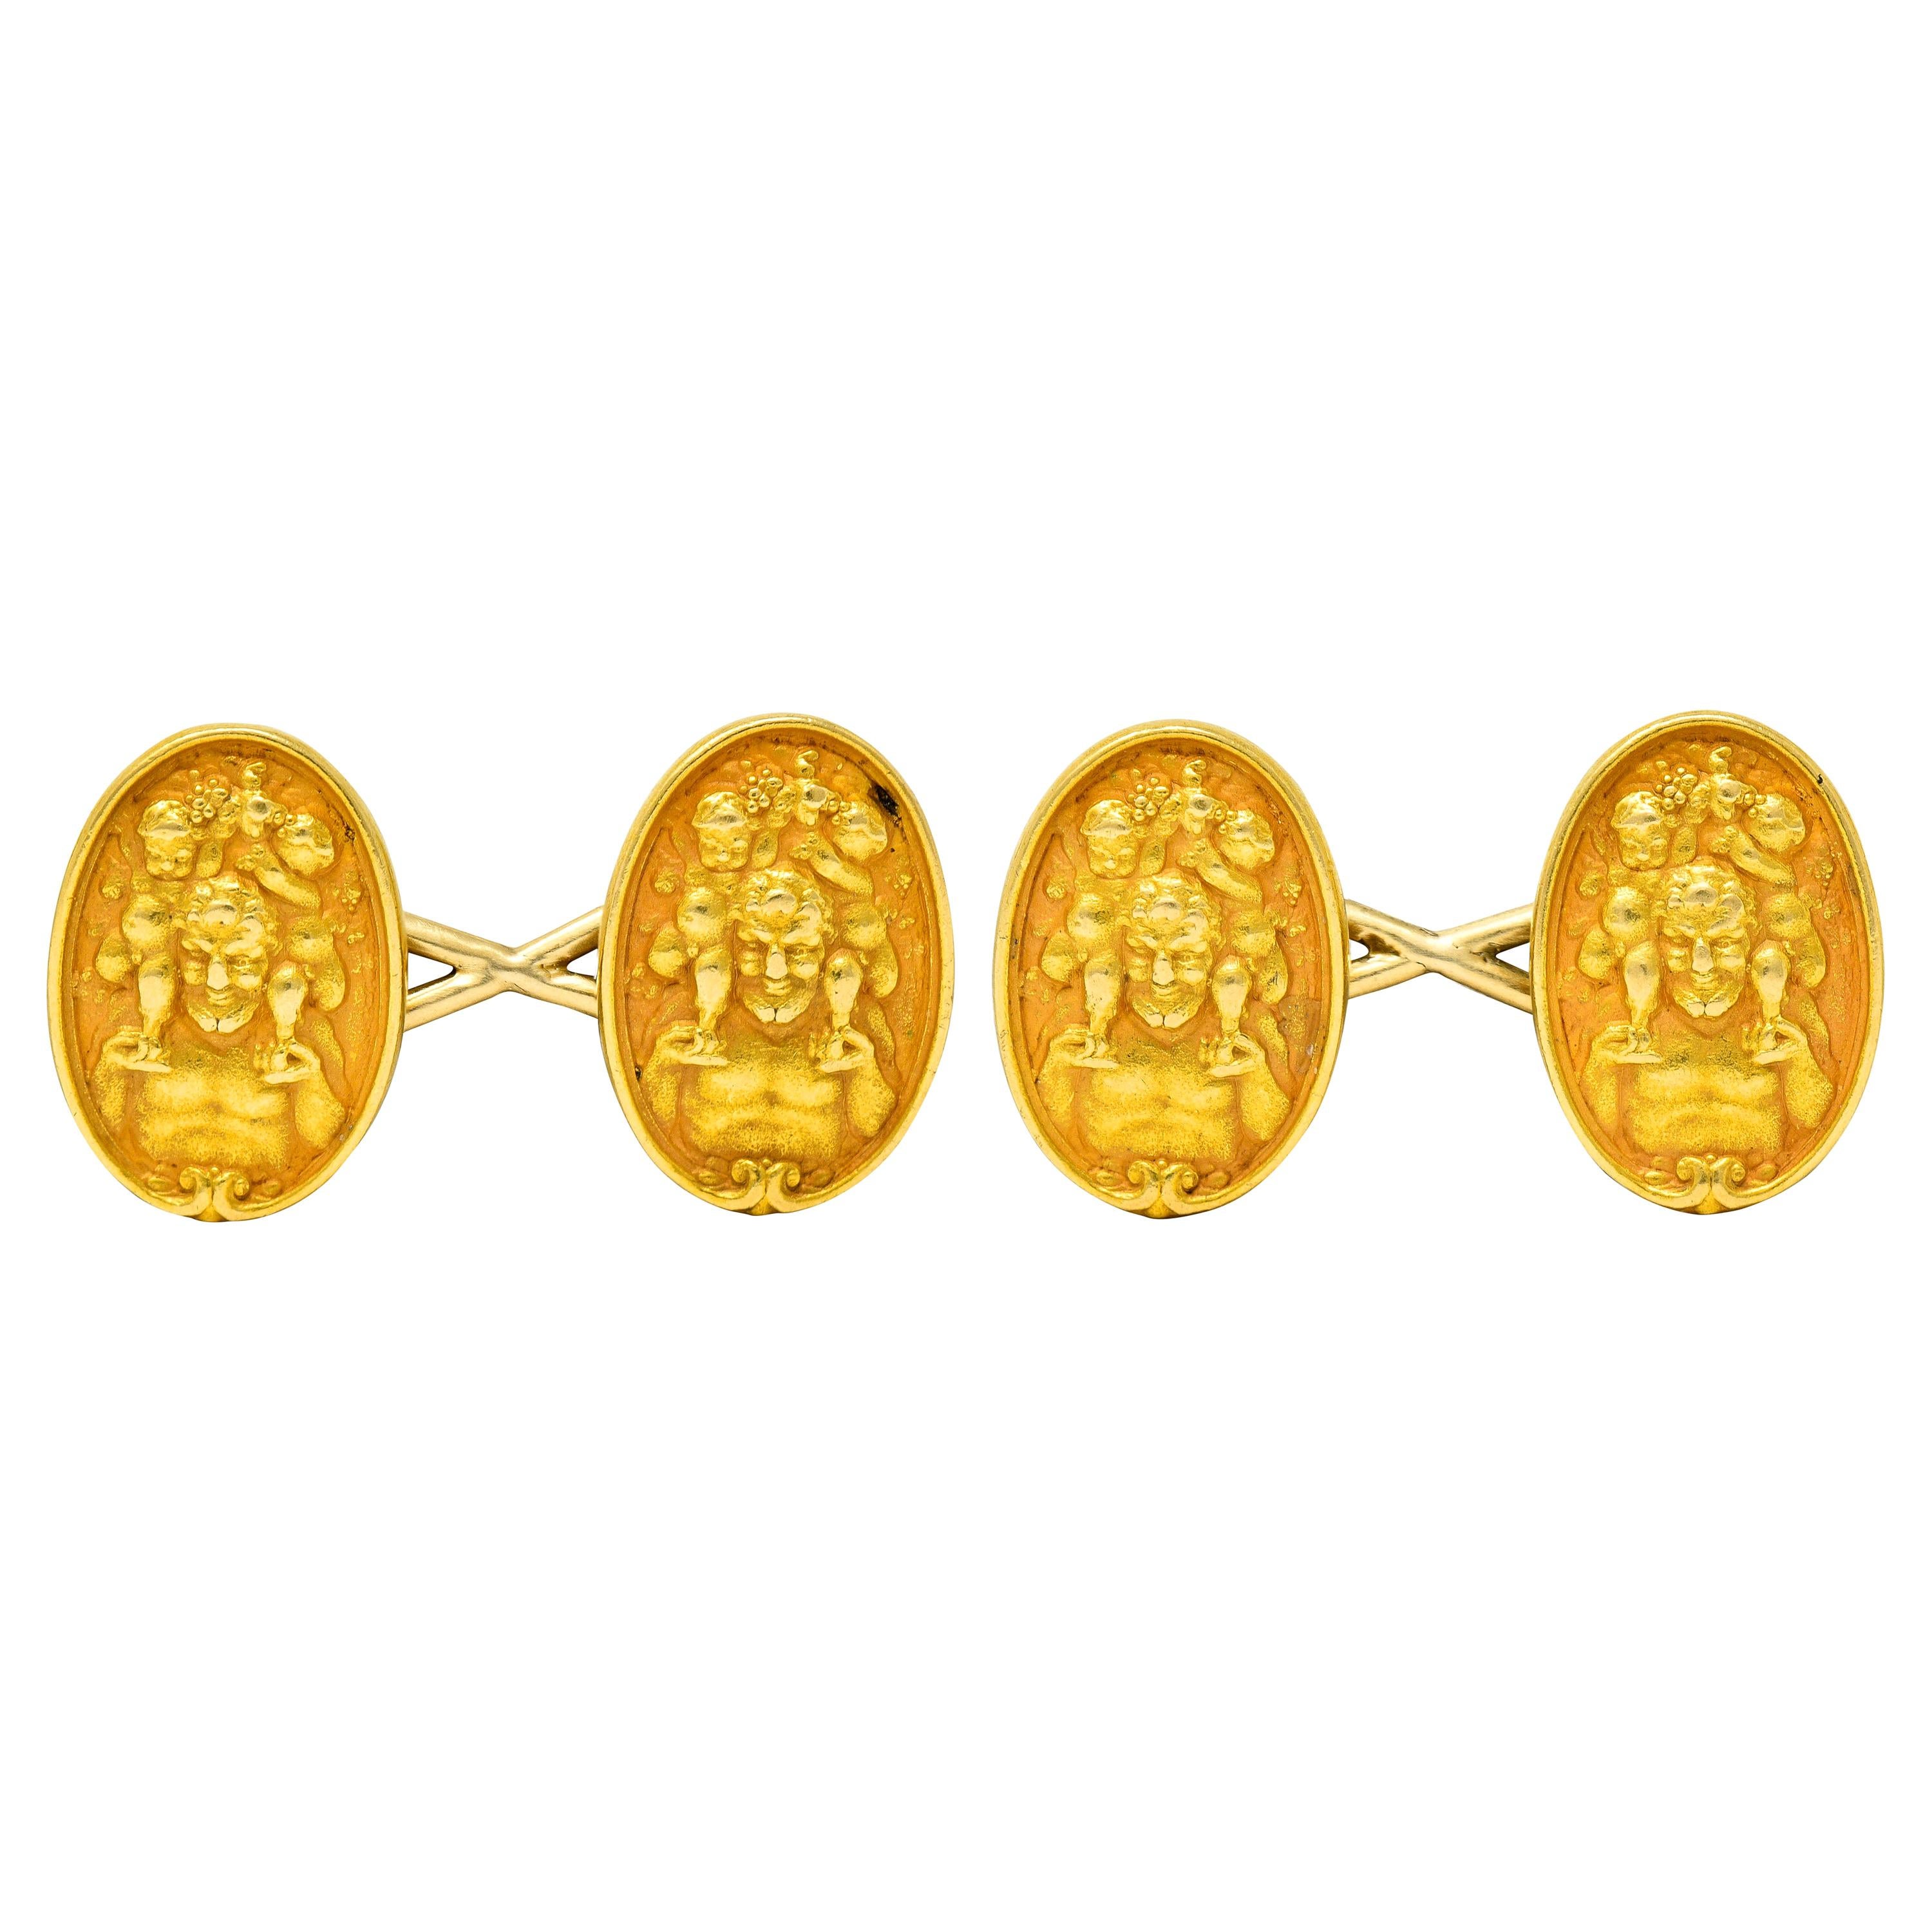 Tiffany & Co. Art Nouveau 18 Karat Yellow Gold Men's Cufflinks